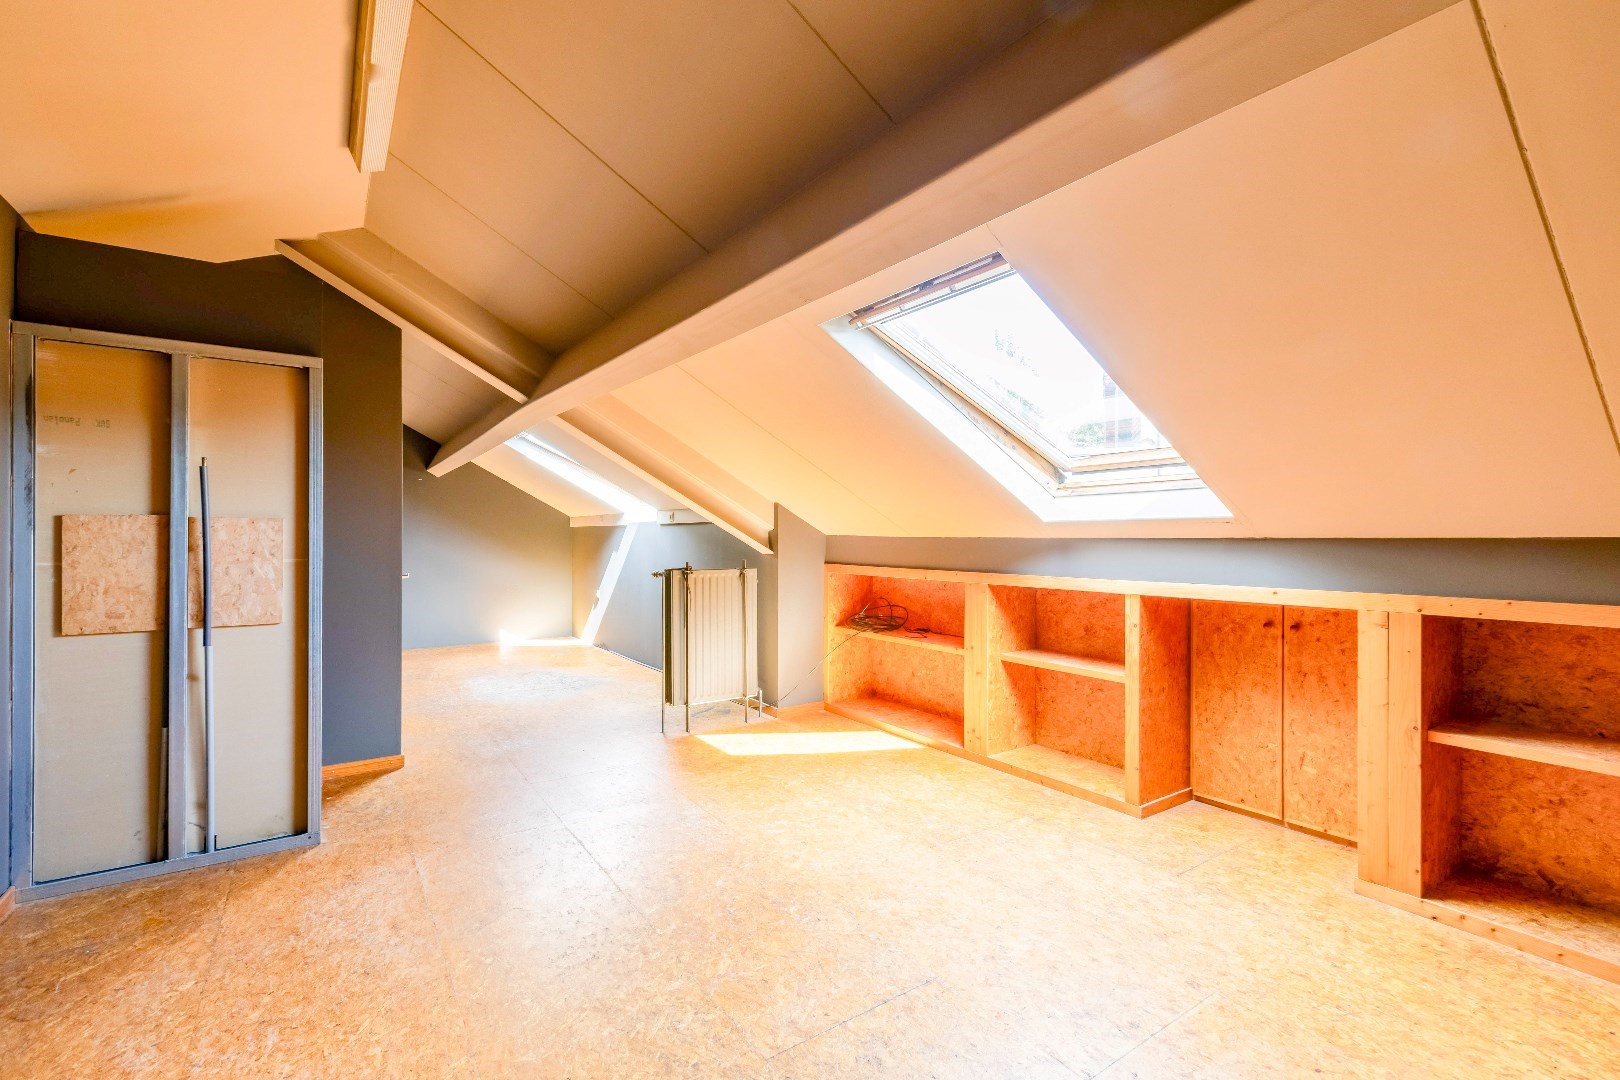 VERHUURD ! Ruime woning met tuin en dubbele garage in Gent - ideale woning voor cohousing 